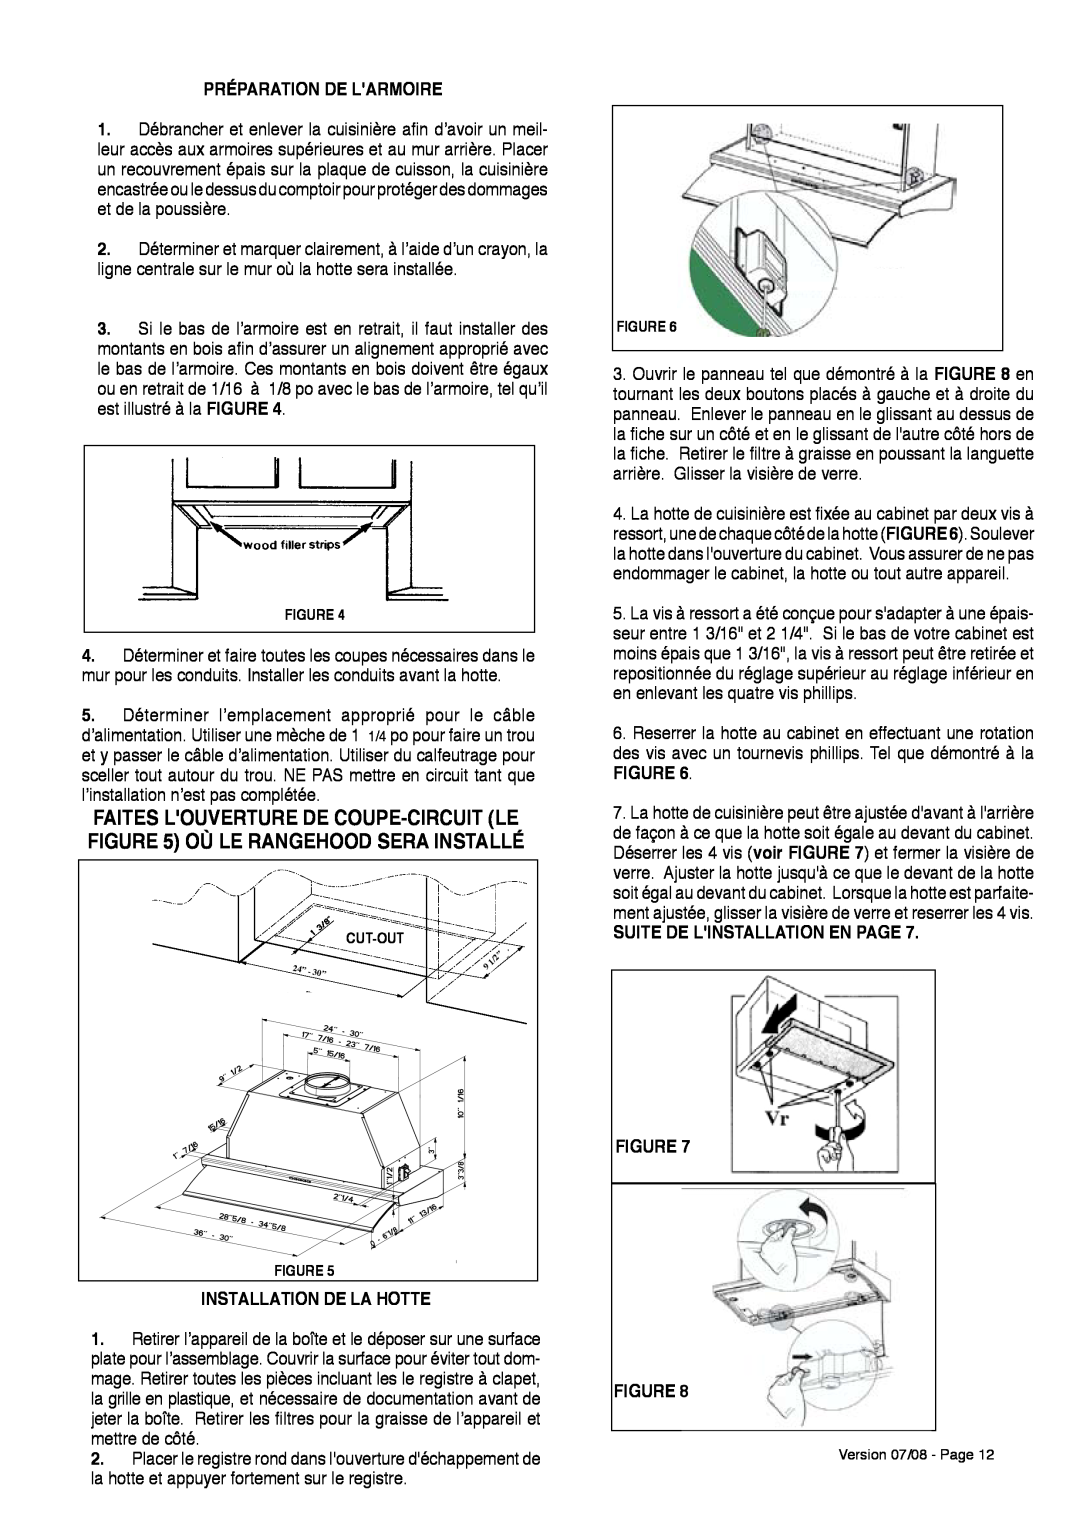 Faber 630006509 installation instructions Préparation De Larmoire, Installation De La Hotte, Suite De Linstallation En Page 